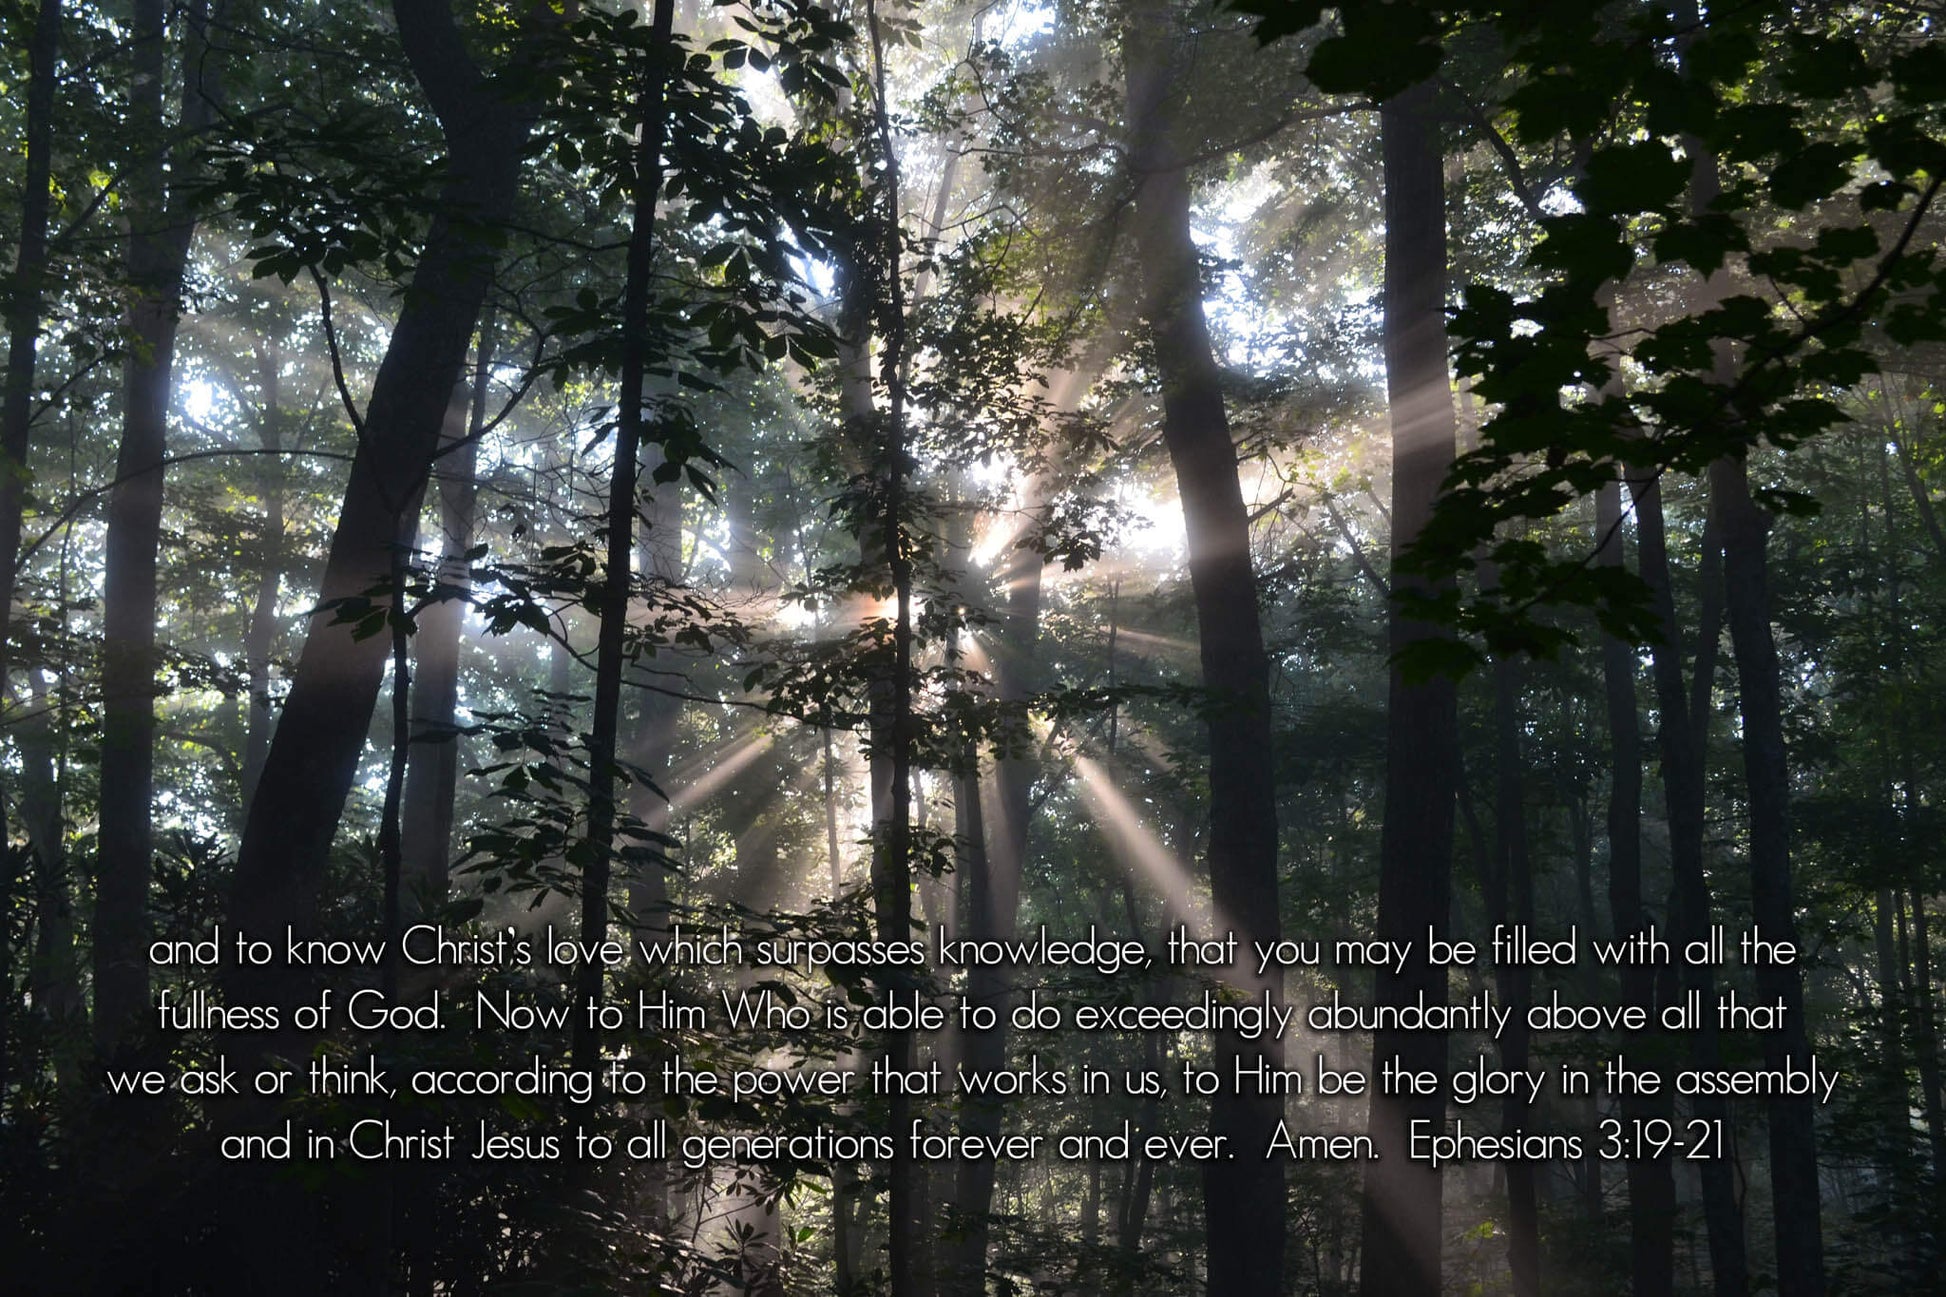 Ephesians 3:19-21 Sunbeam through Forest Christian greeting card